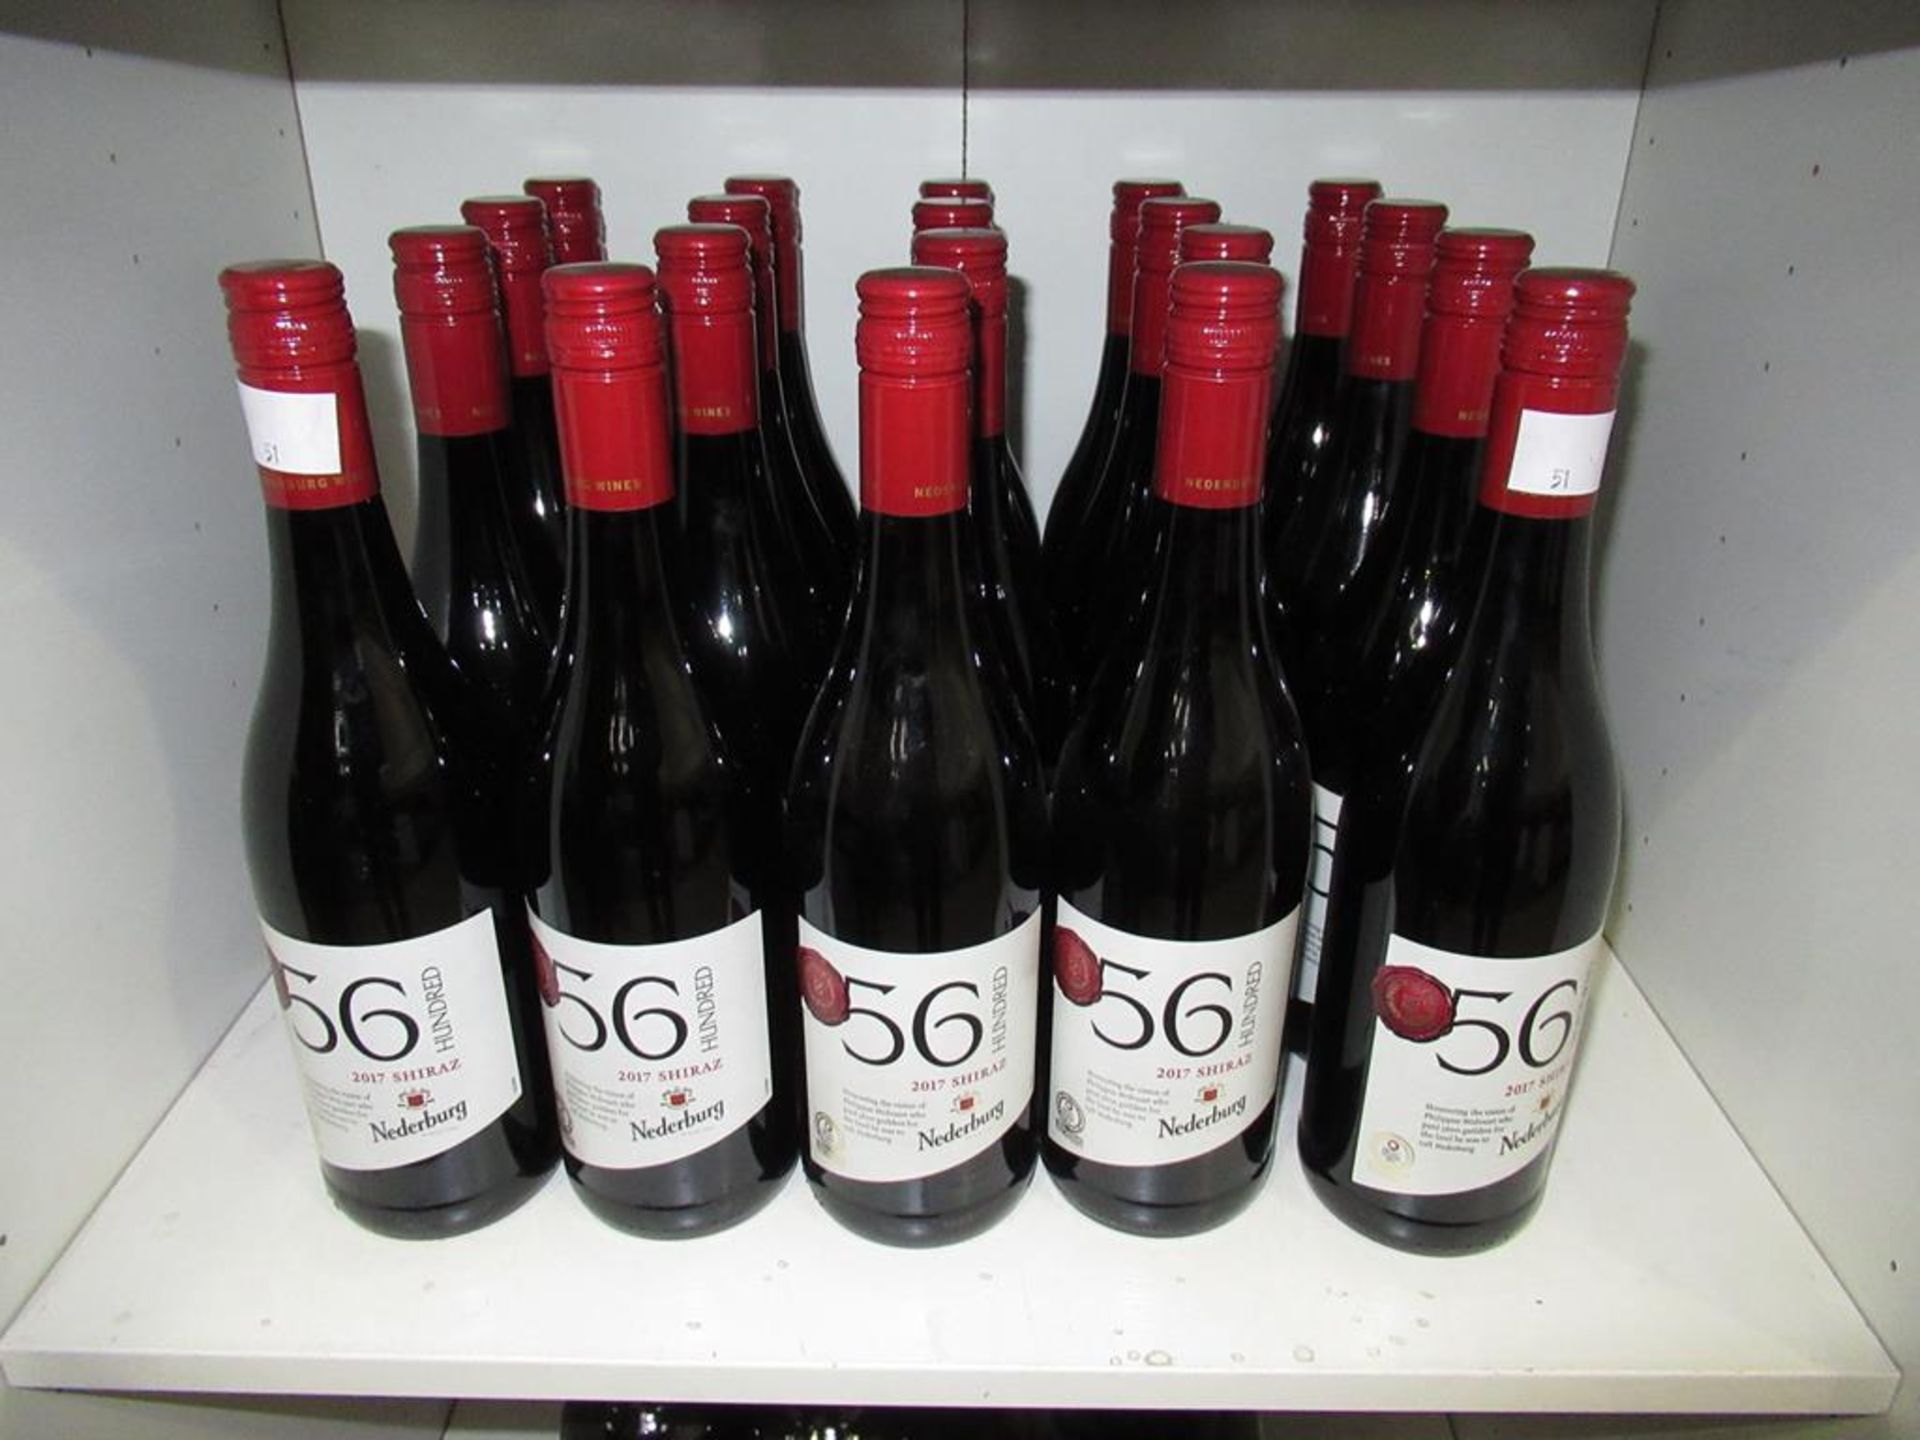 Twenty bottles of Nederburg '56 Hundred' 2017 Shiraz red wine